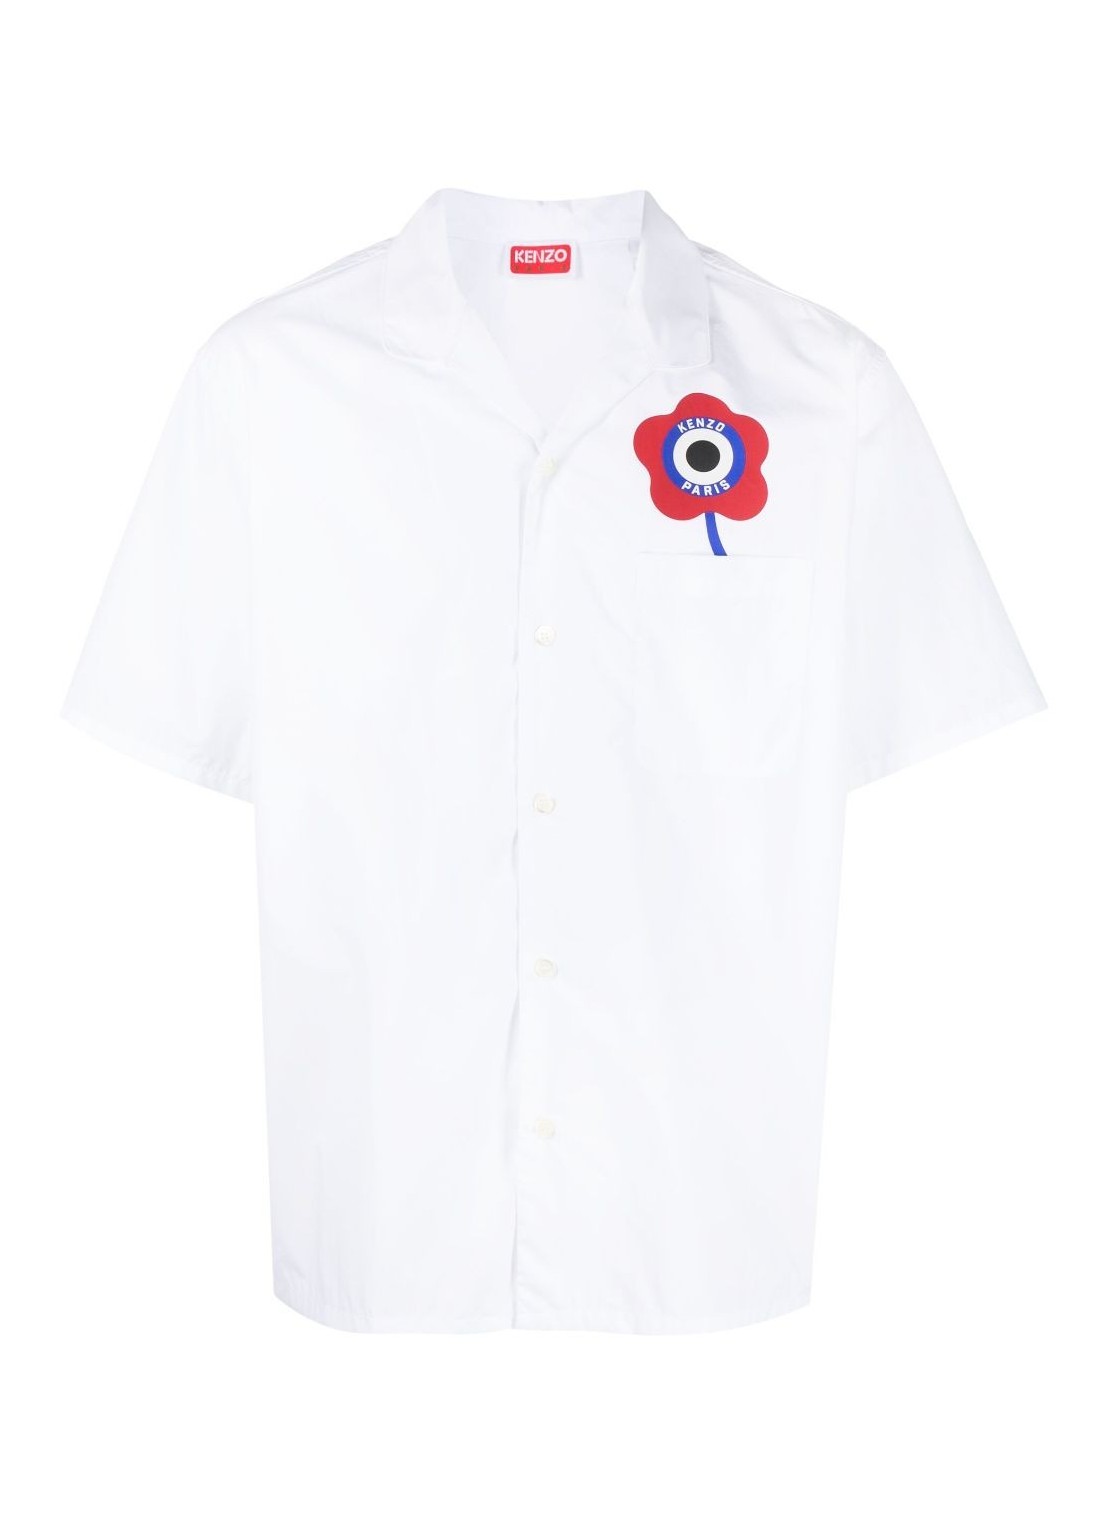 Camiseria kenzo shirt man kenzo target ss shirt fd65ch1175de 02 talla blanco
 